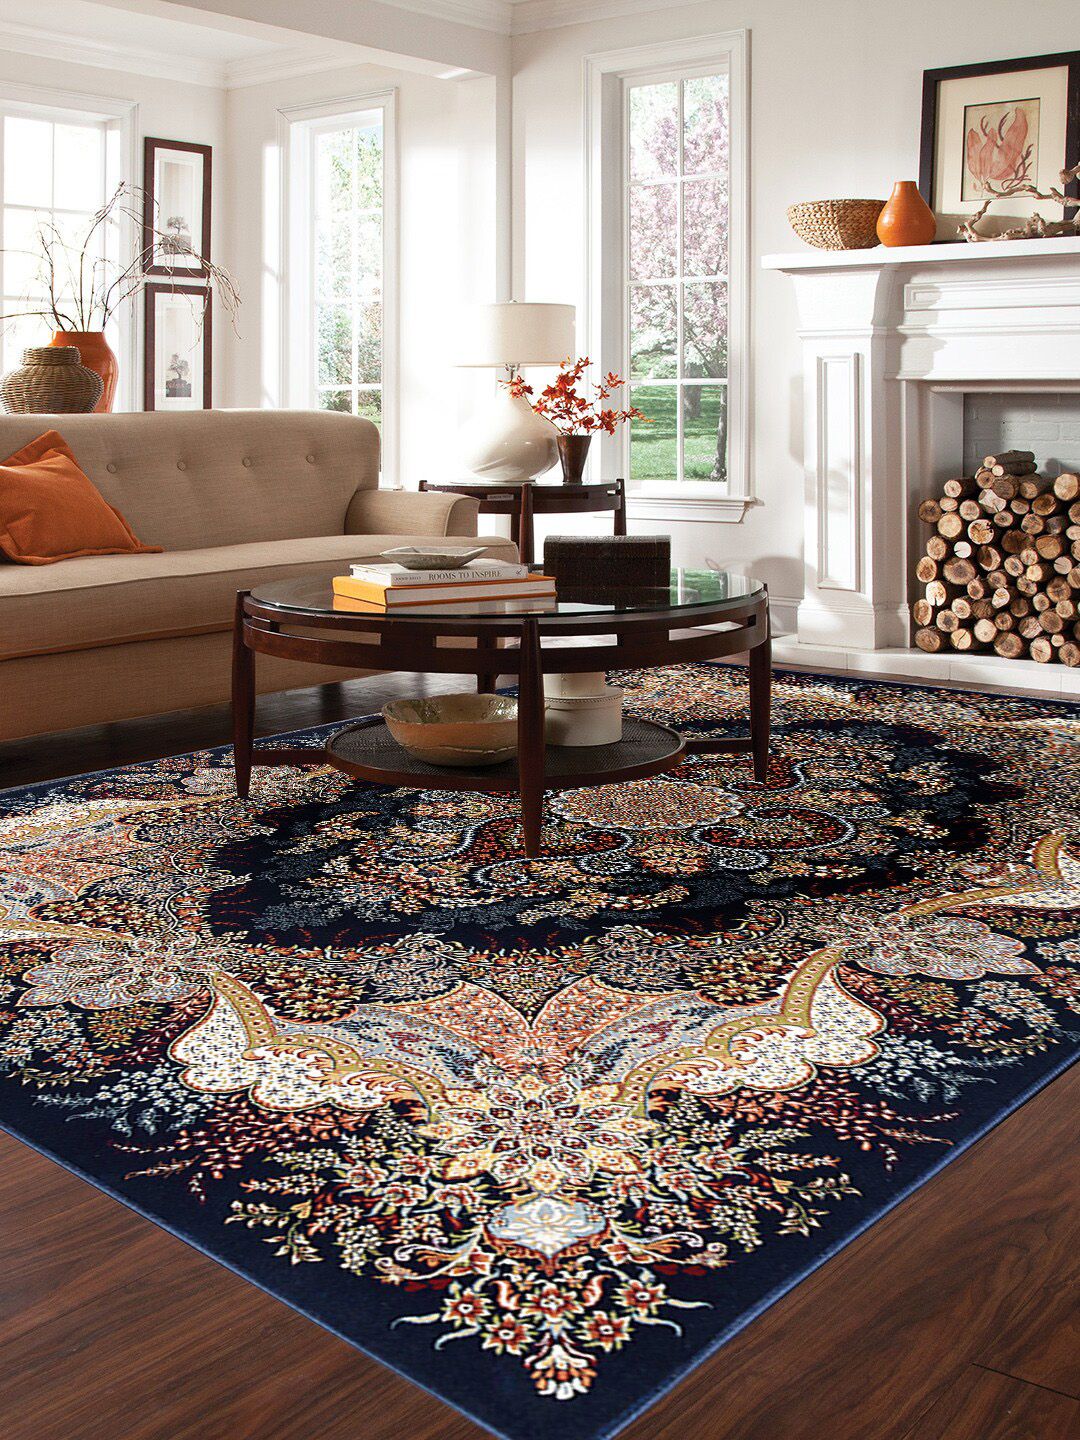 Ddecor Orange Ethnic Motifs Carpet Price in India